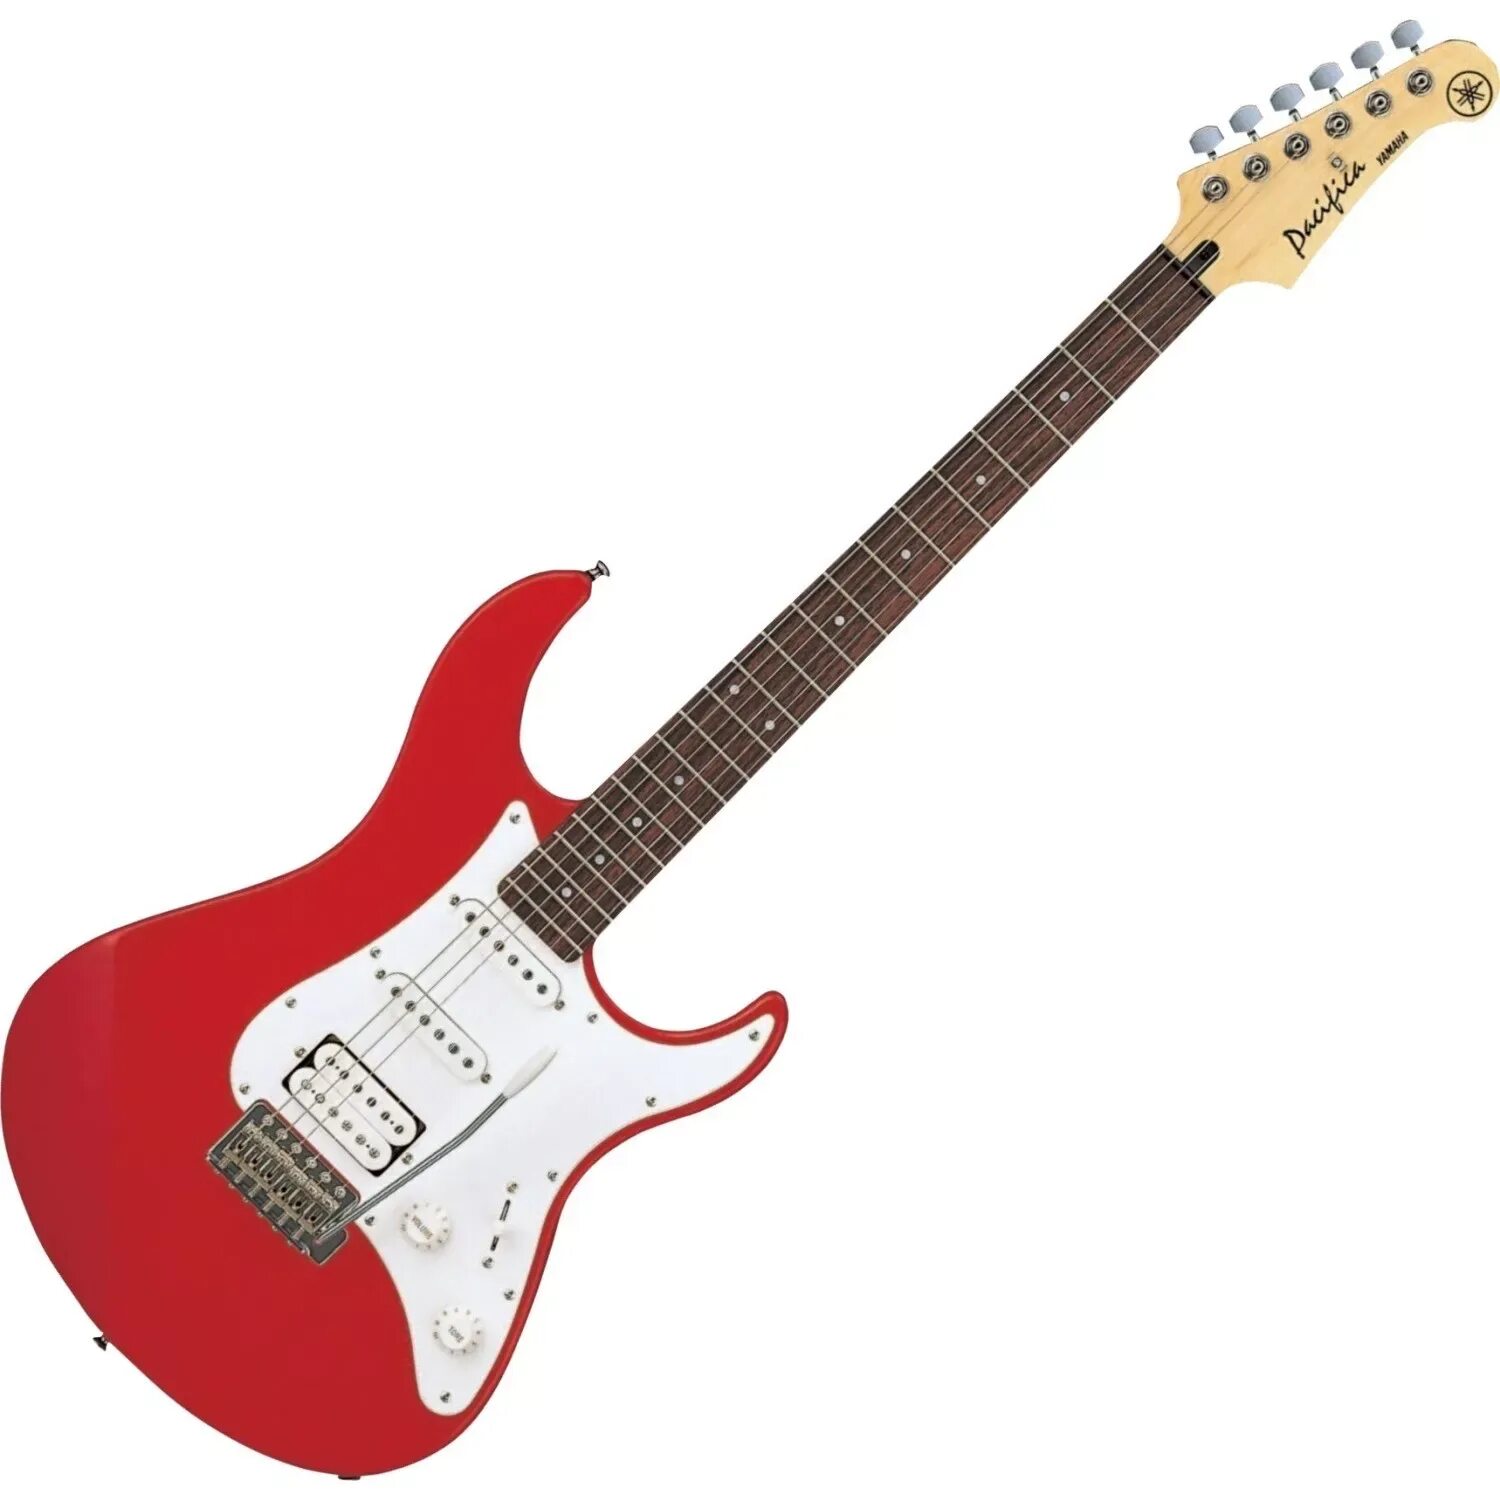 Yamaha Pacifica 112j Red. Электрогитара Fender Squier. Электрогитара Aria STG-003 CA. Yamaha Pacifica 112j SB.